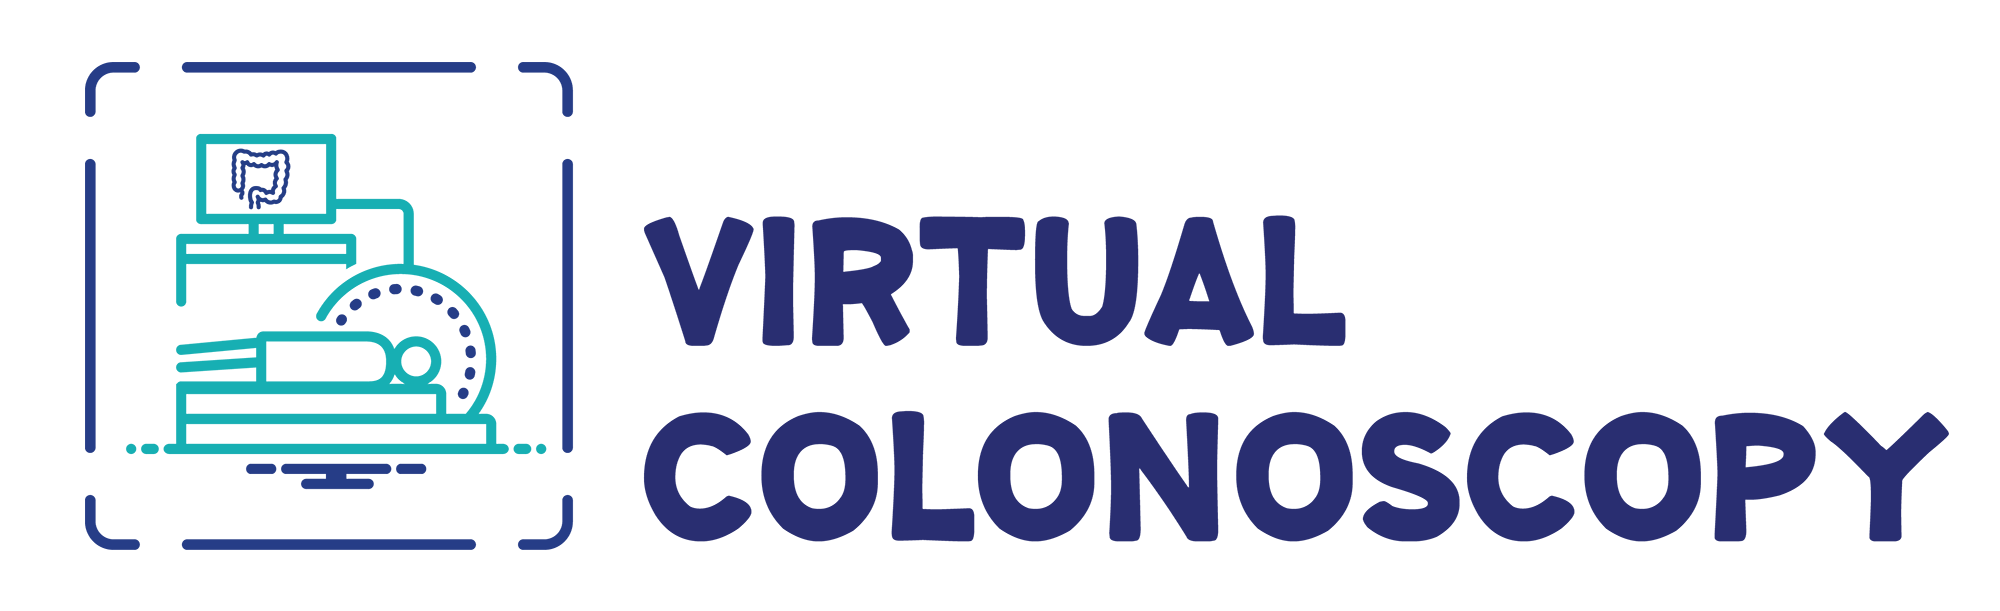 Virtual Colonoscopy, Delaware Imaging Network